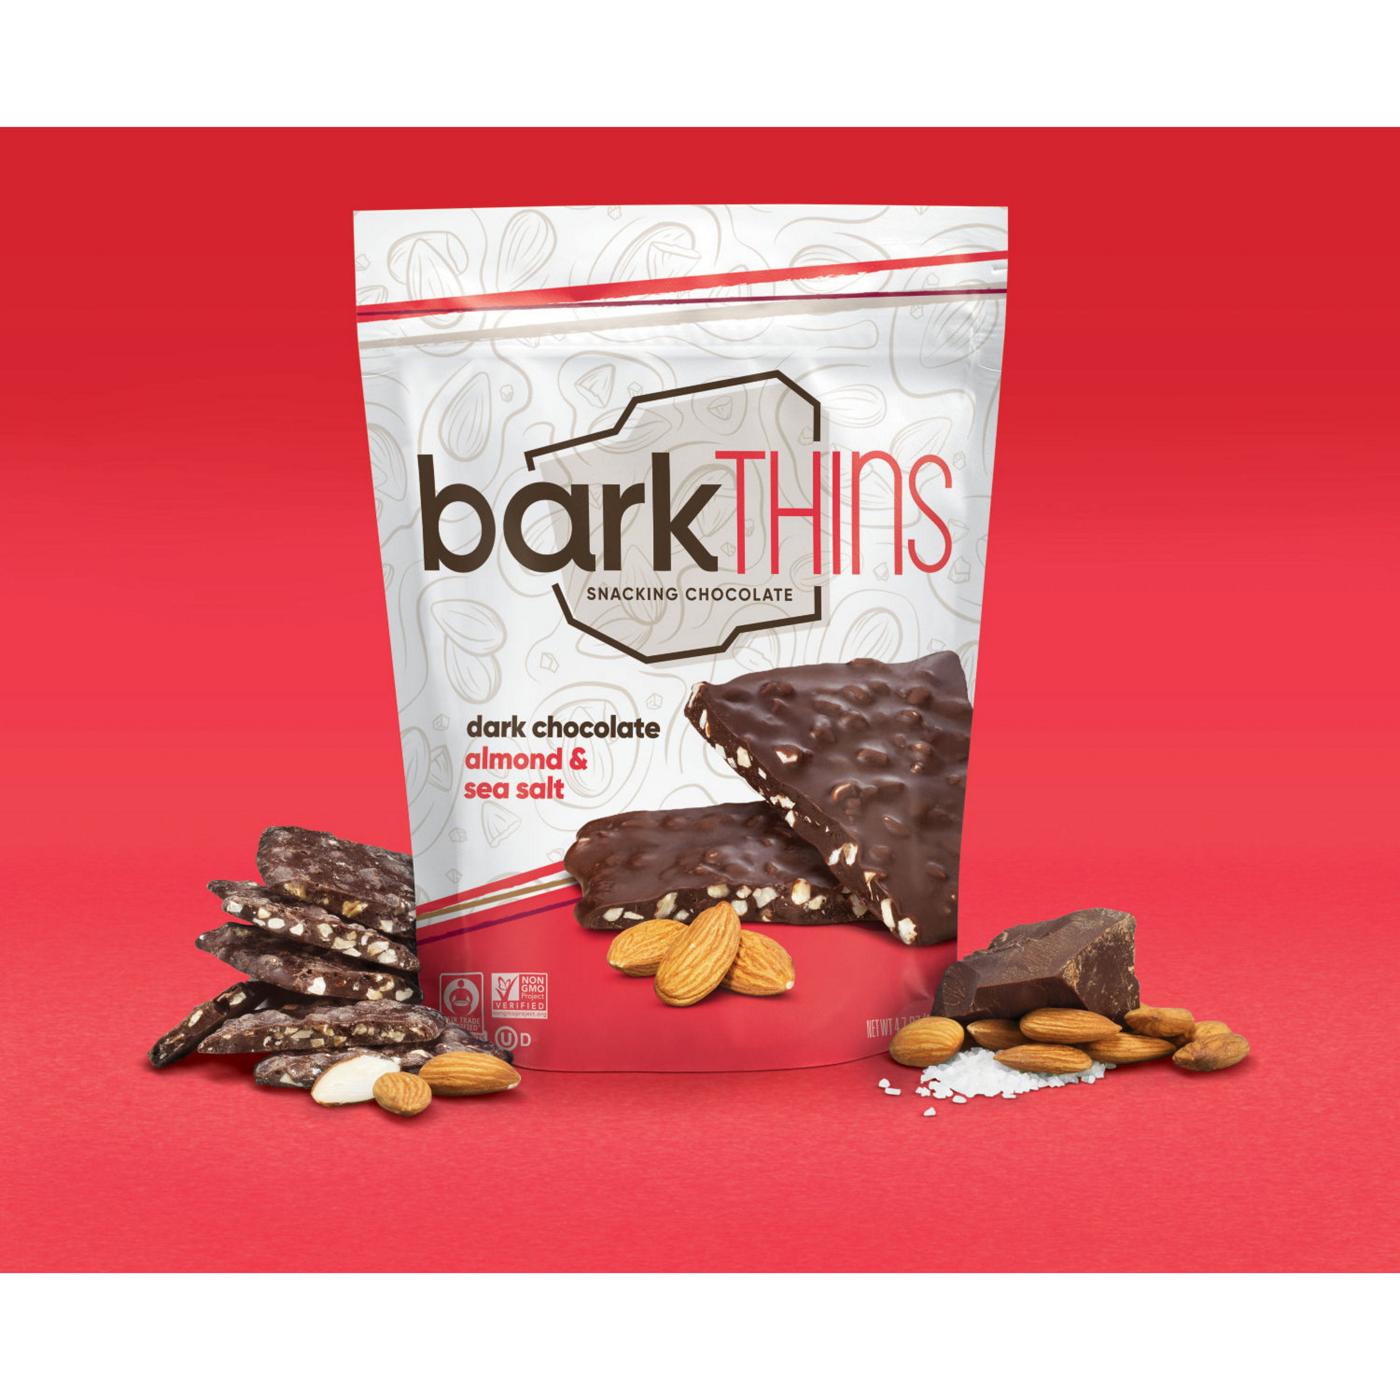 Barkthins Dark Chocolate Almond & Sea Salt Snacking Chocolate Bag; image 3 of 7